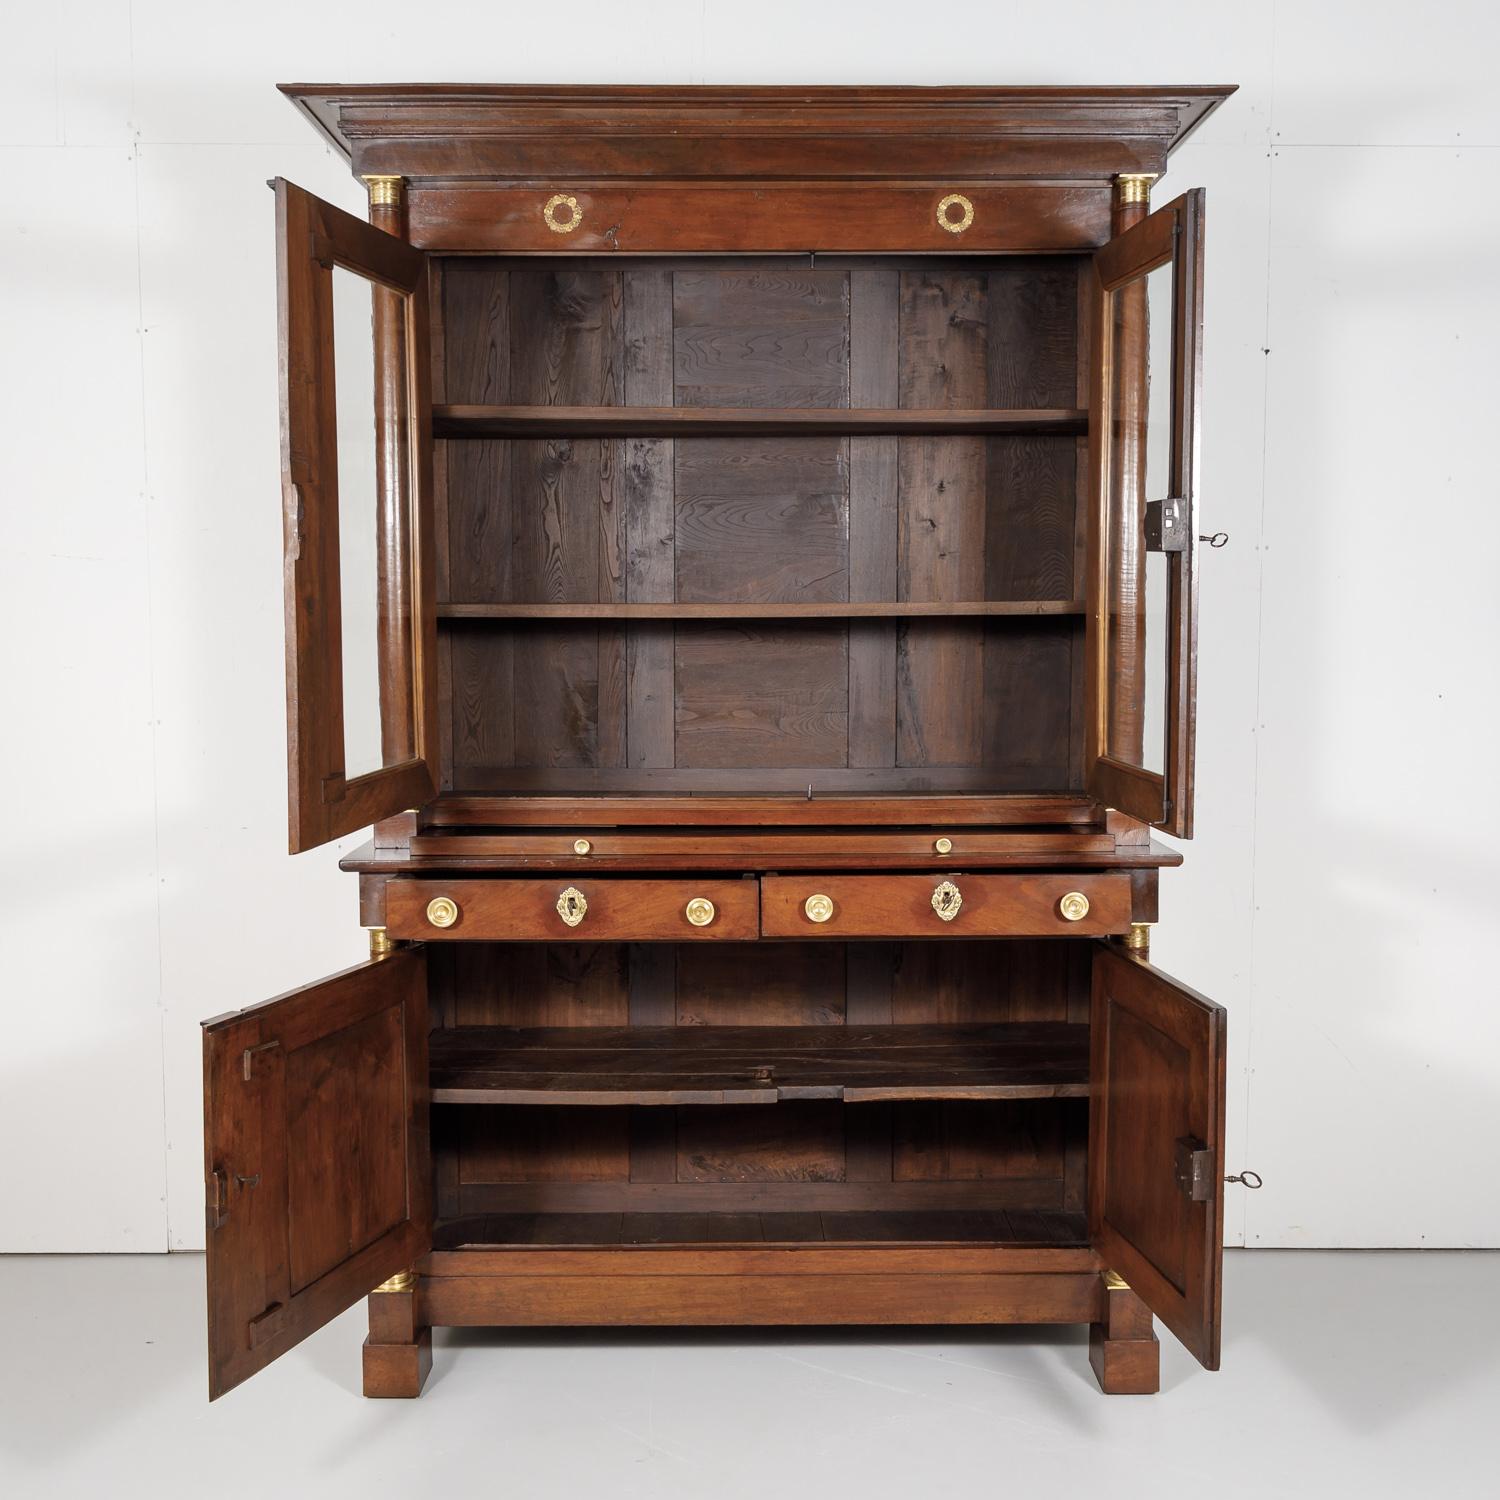 19th Century French Empire Period Walnut Bibliotheque or Bookcase In Good Condition For Sale In Birmingham, AL